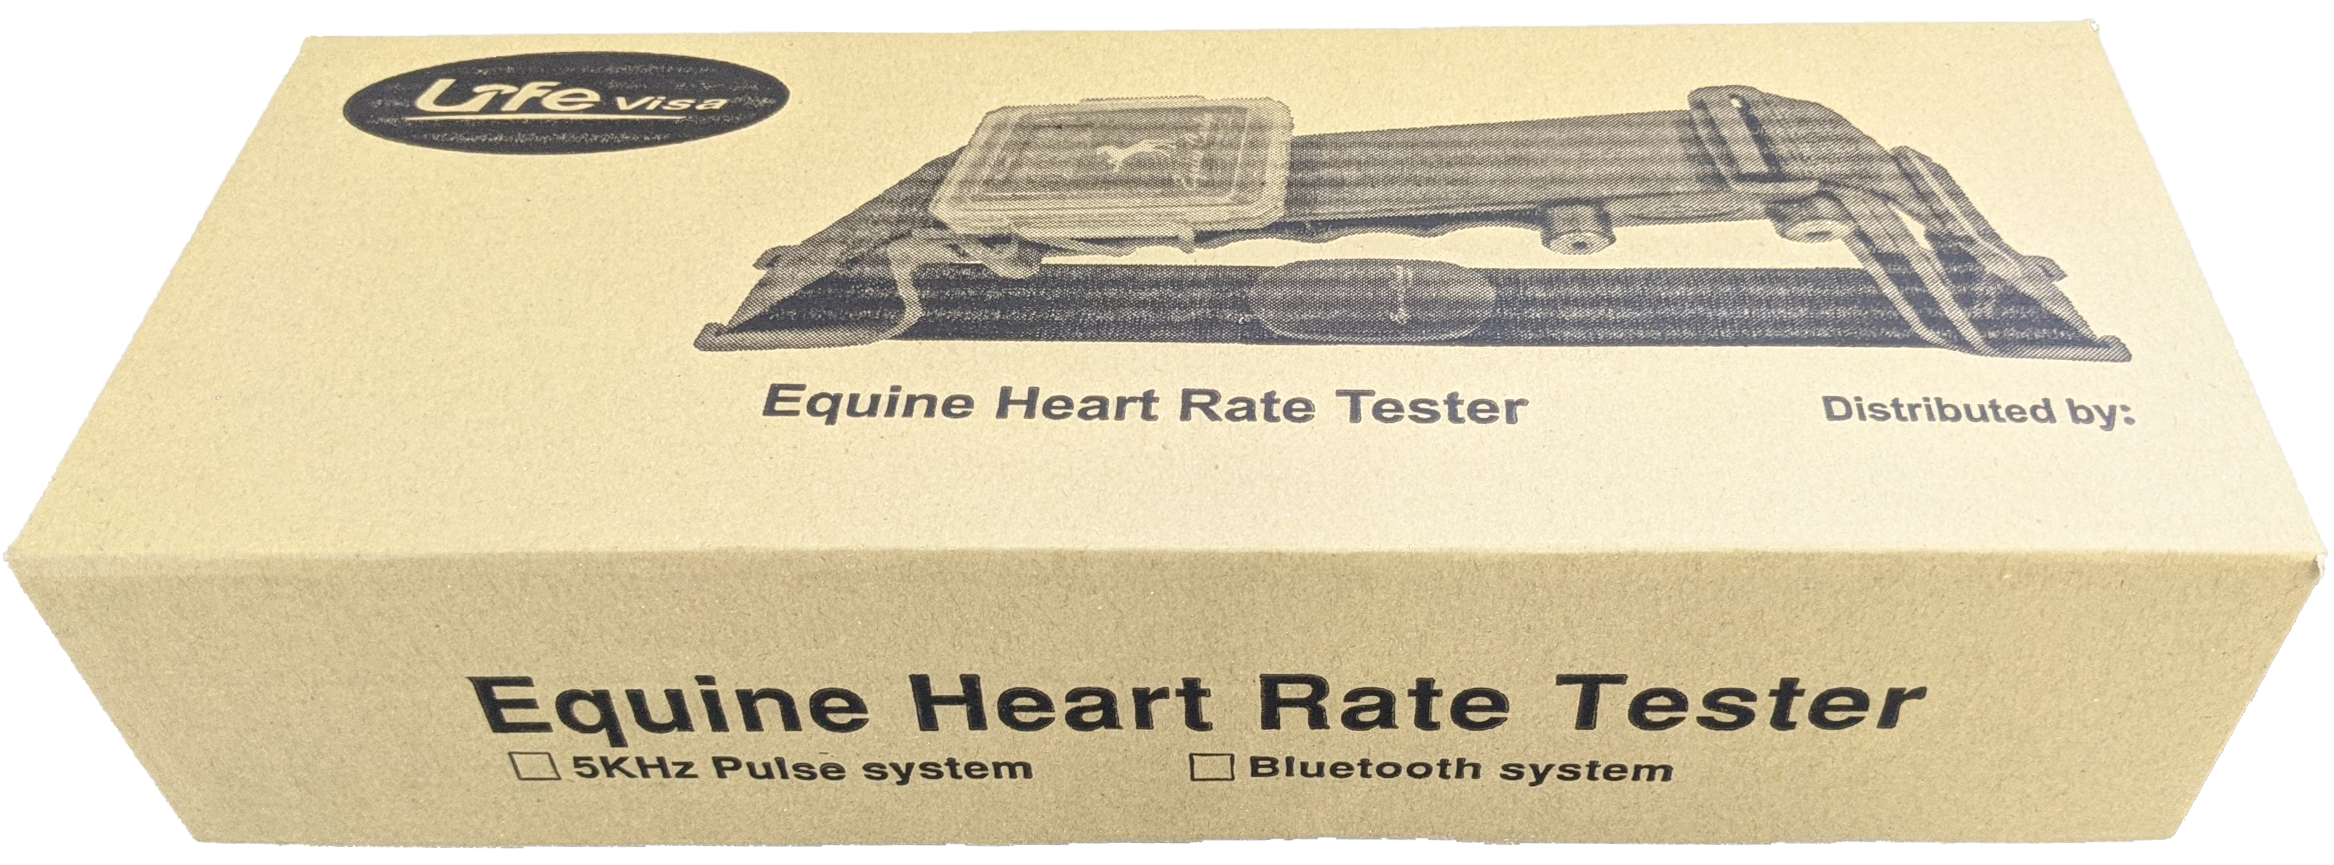 Lifevisa,lifevisa,Taiwan Biotronic,heart rate monitor,healthcheck,Biotronic pulse